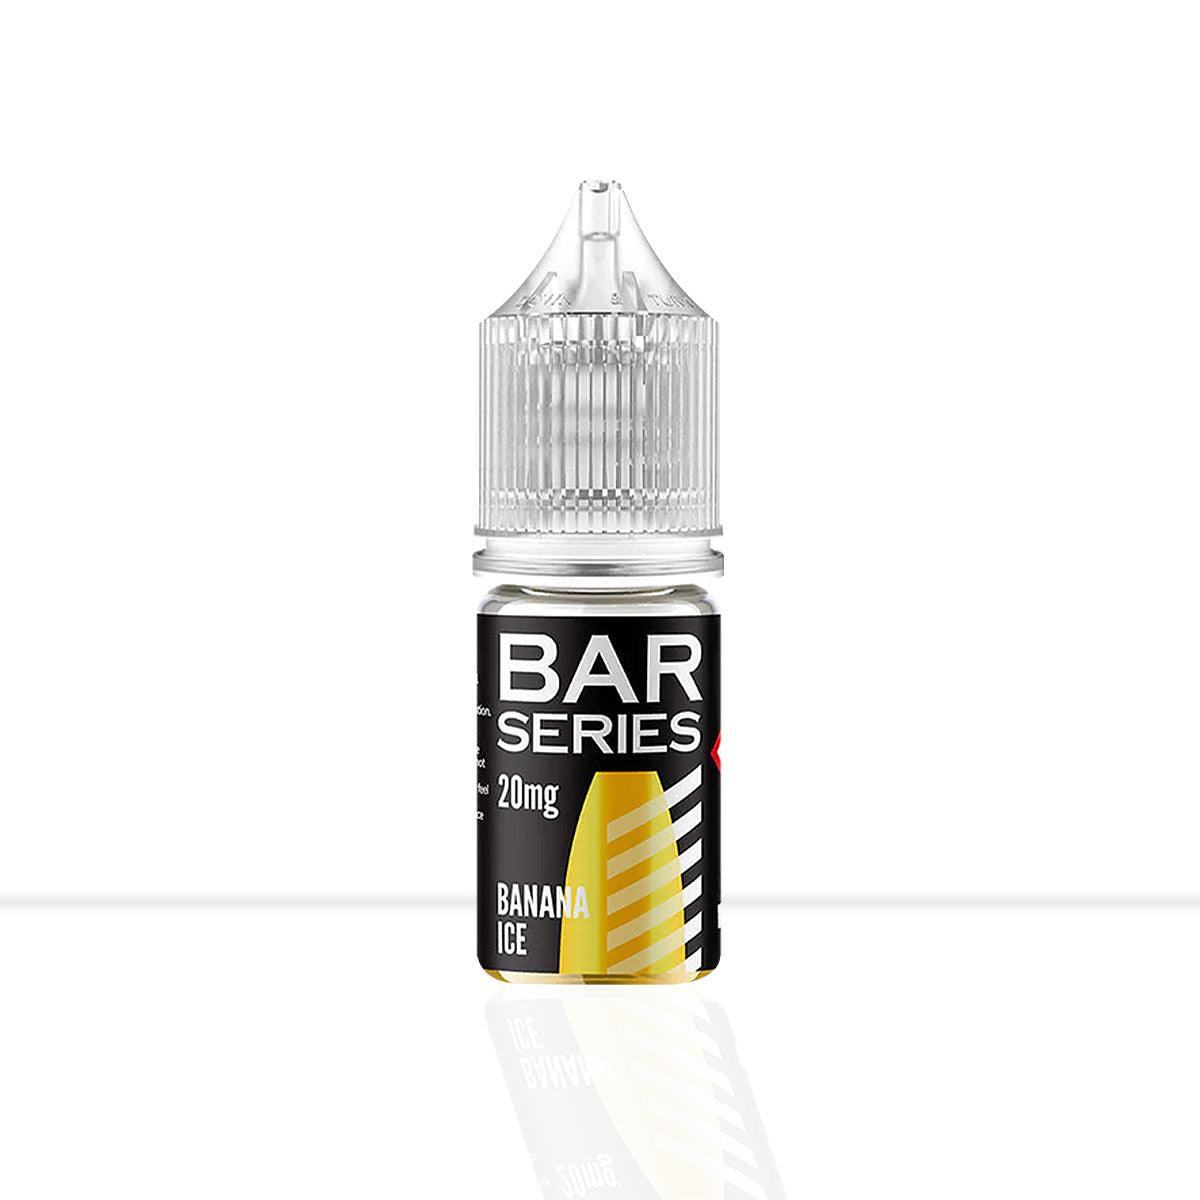 Banana Ice Nic Salt E-Liquid Bar Series - Banana Ice Nic Salt E-Liquid Bar Series - E Liquid